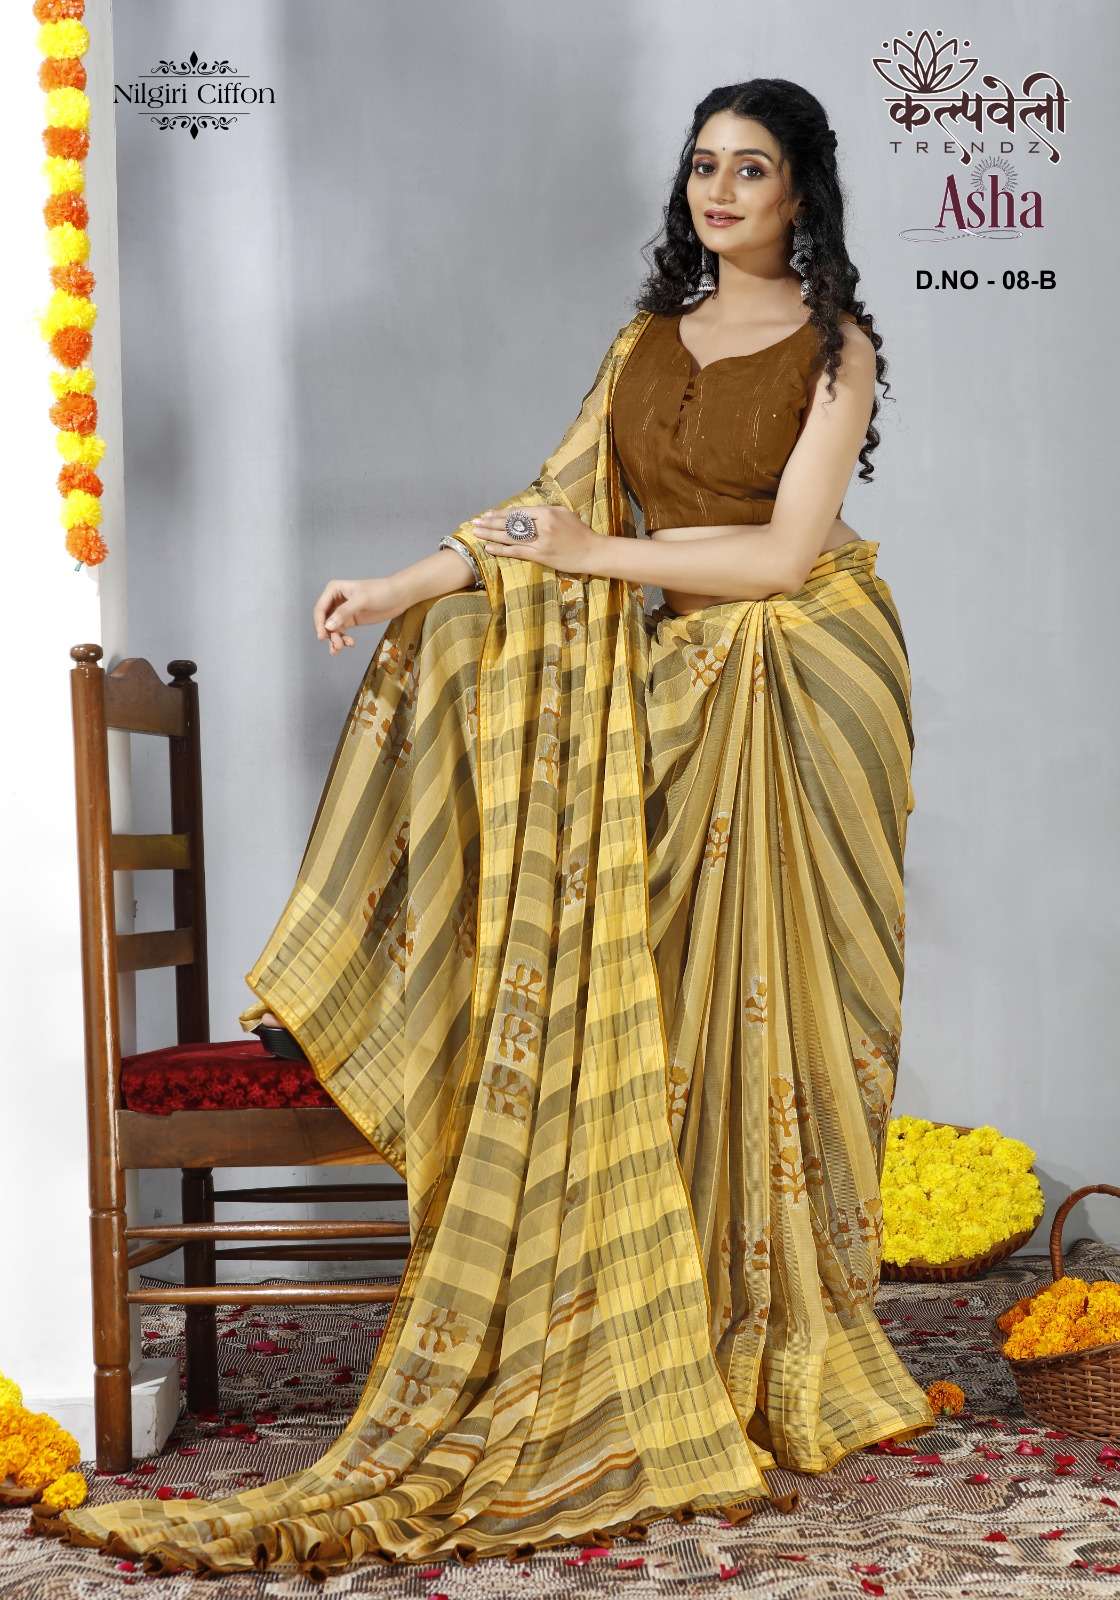 kalpavelly trendz asha 8 fancy nilgiri chiffon saree with sequence blouse collection